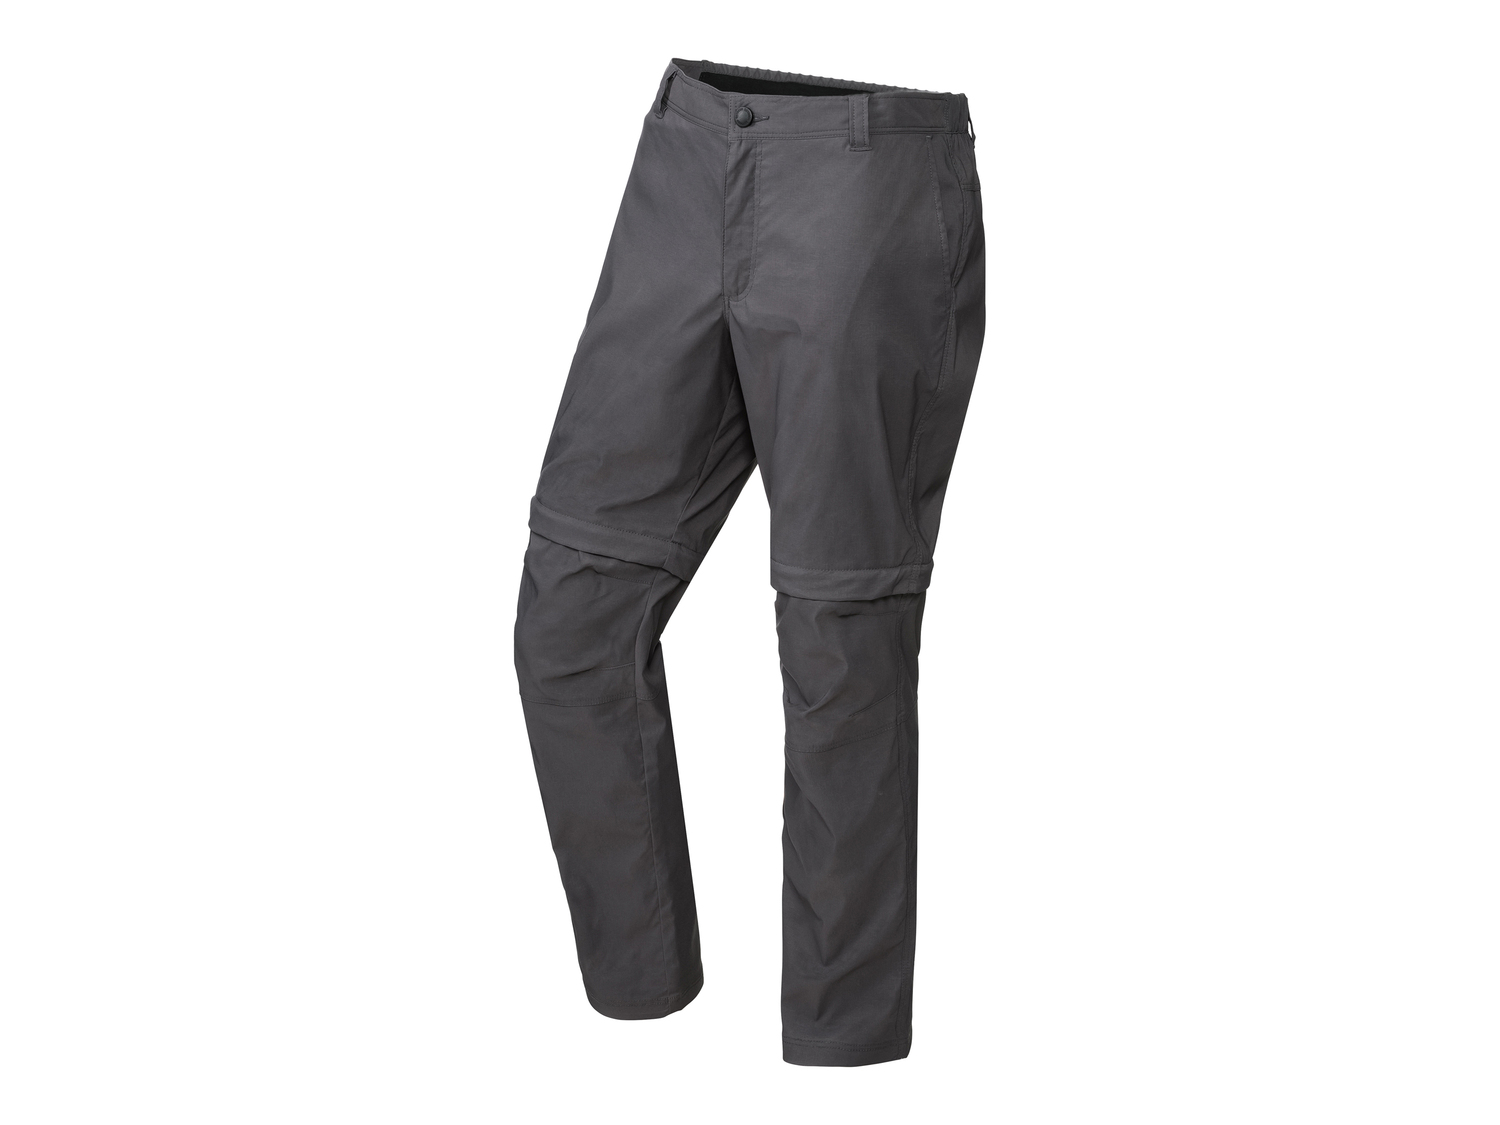 Pantaloni da trekking per uomo Crivit, prezzo 11.99 &#8364; 
Misure: 48-56 
- ...